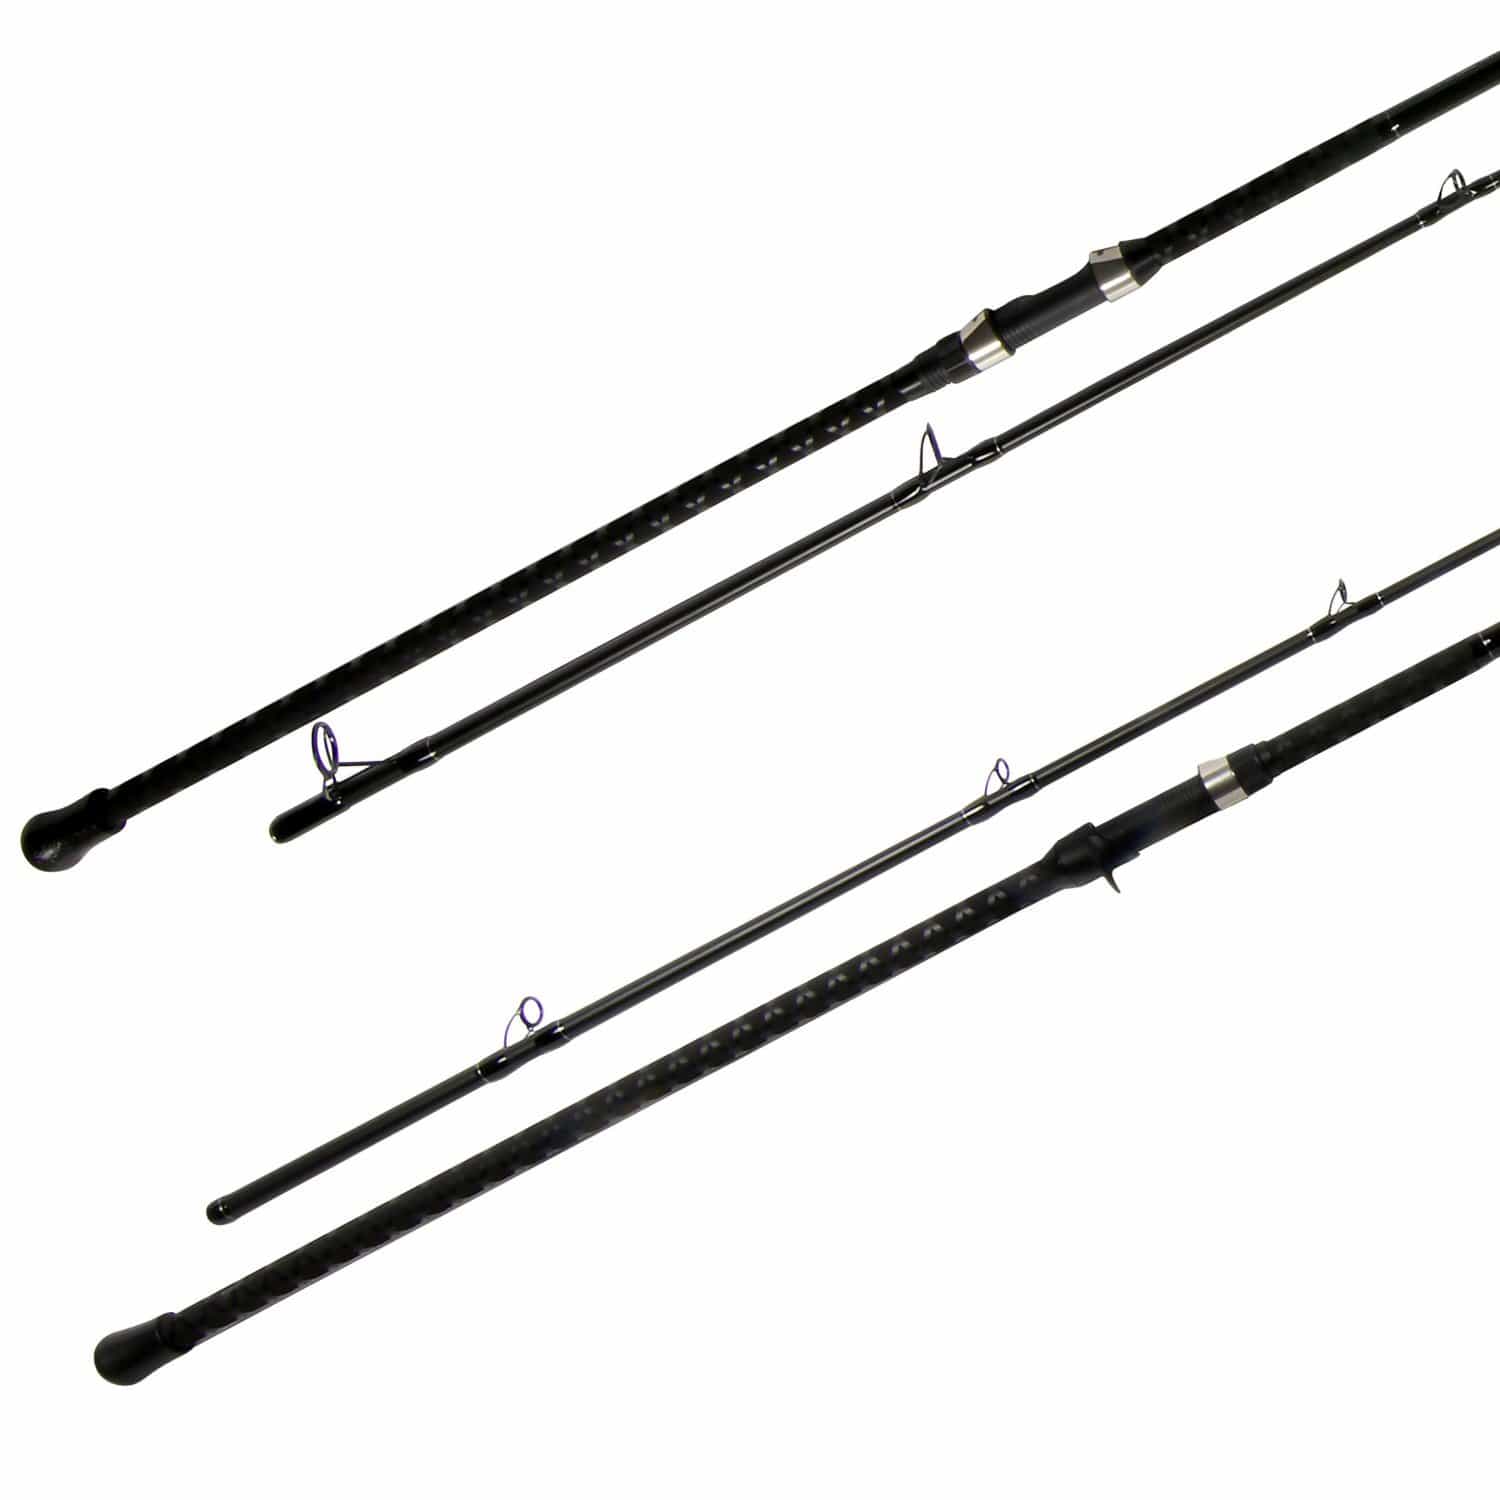 Shimano Saltwater Rods